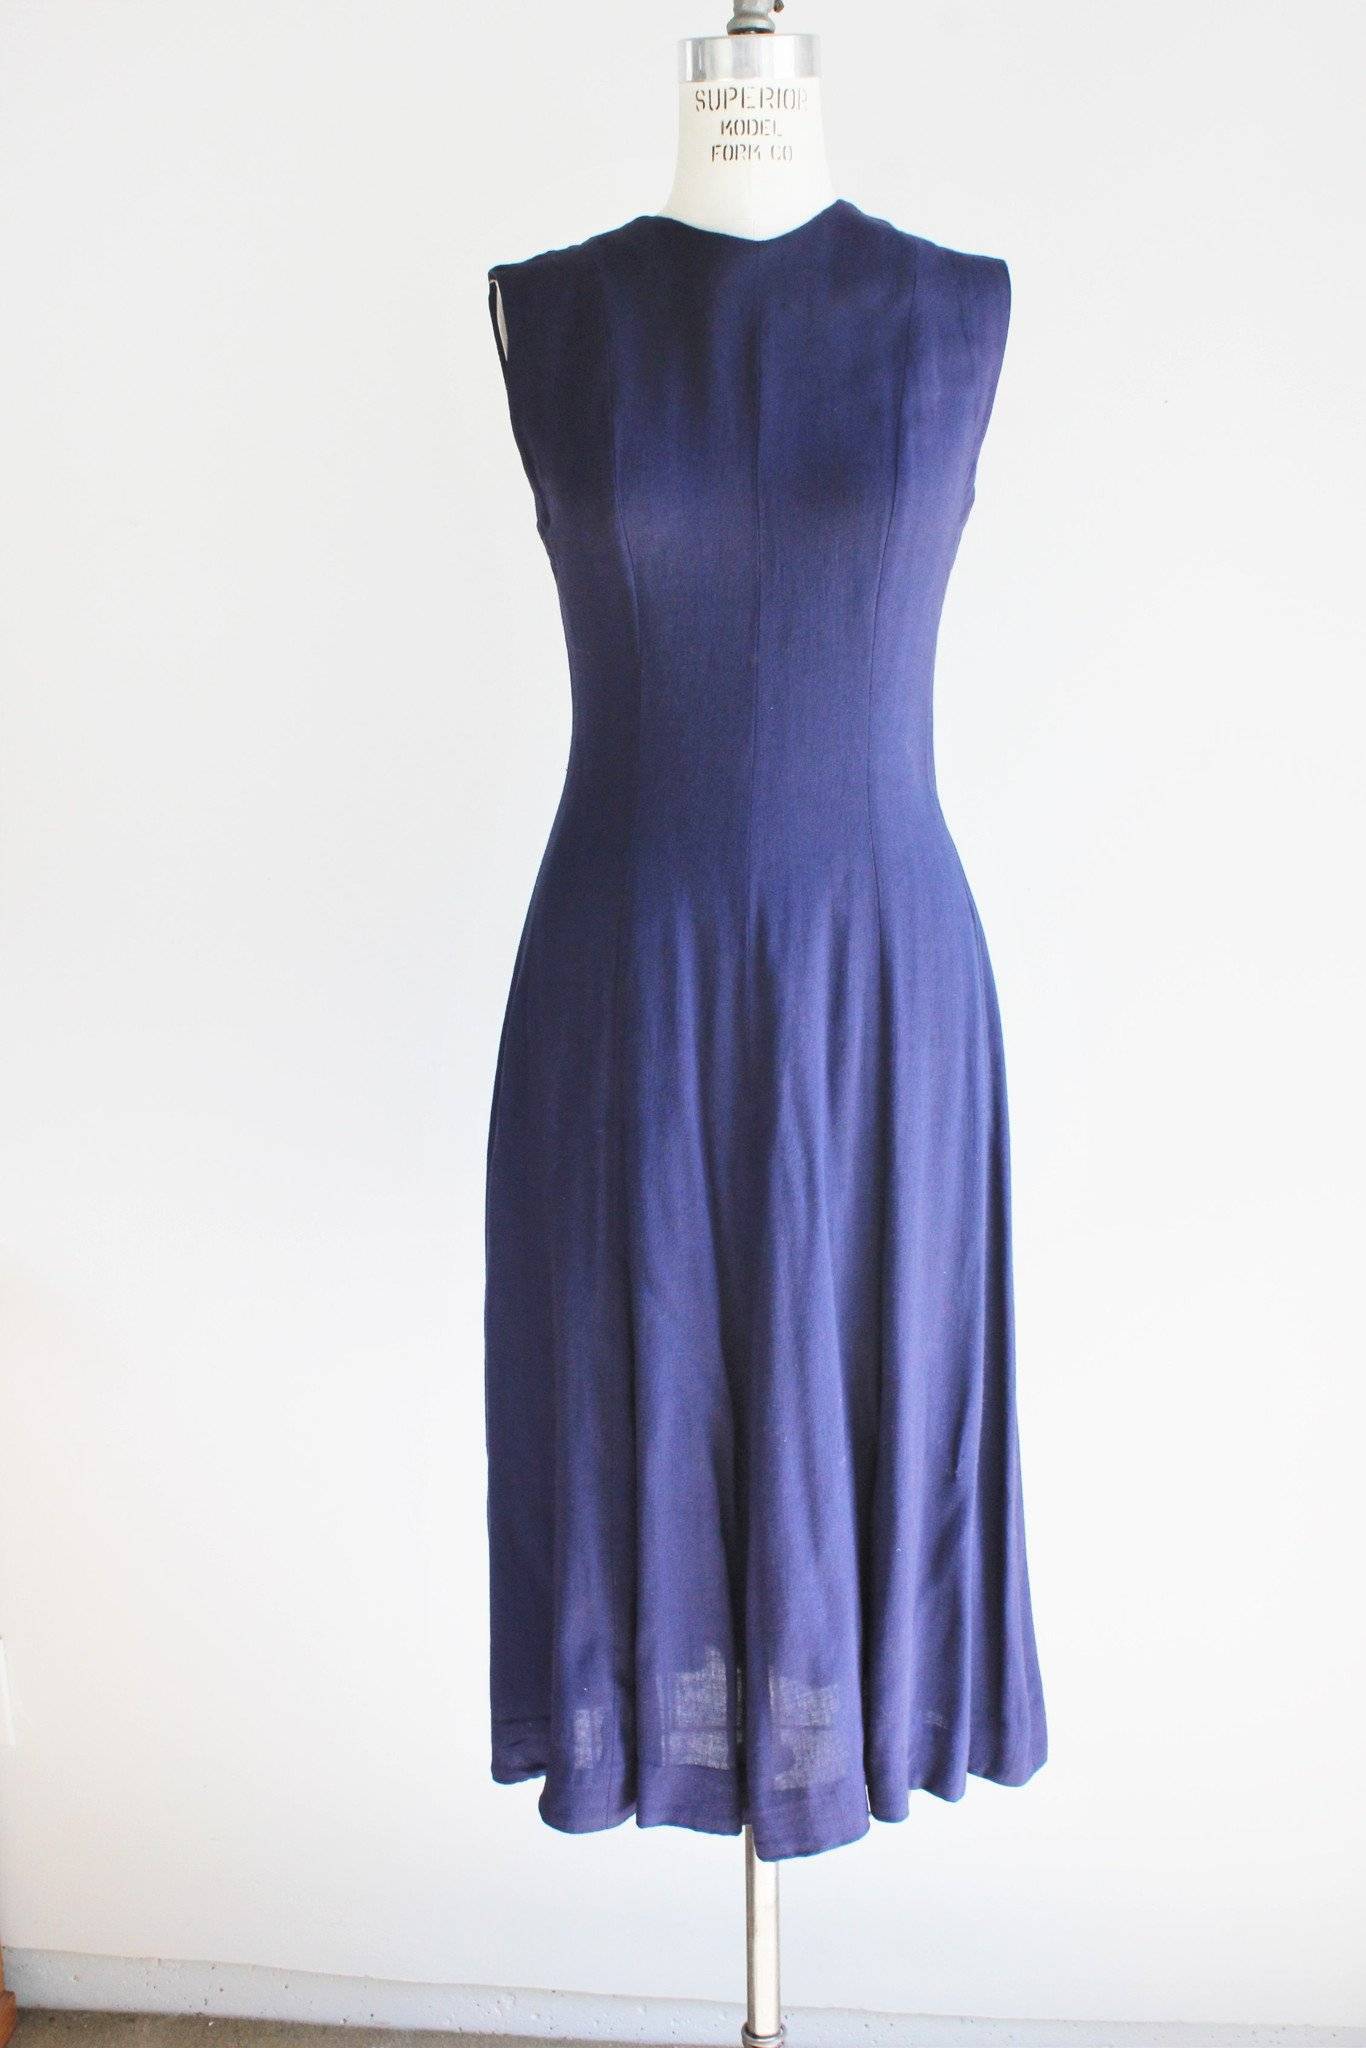 Vintage 1950s Navy Blue Sleeveless Summer Dress – Toadstool Farm Vintage